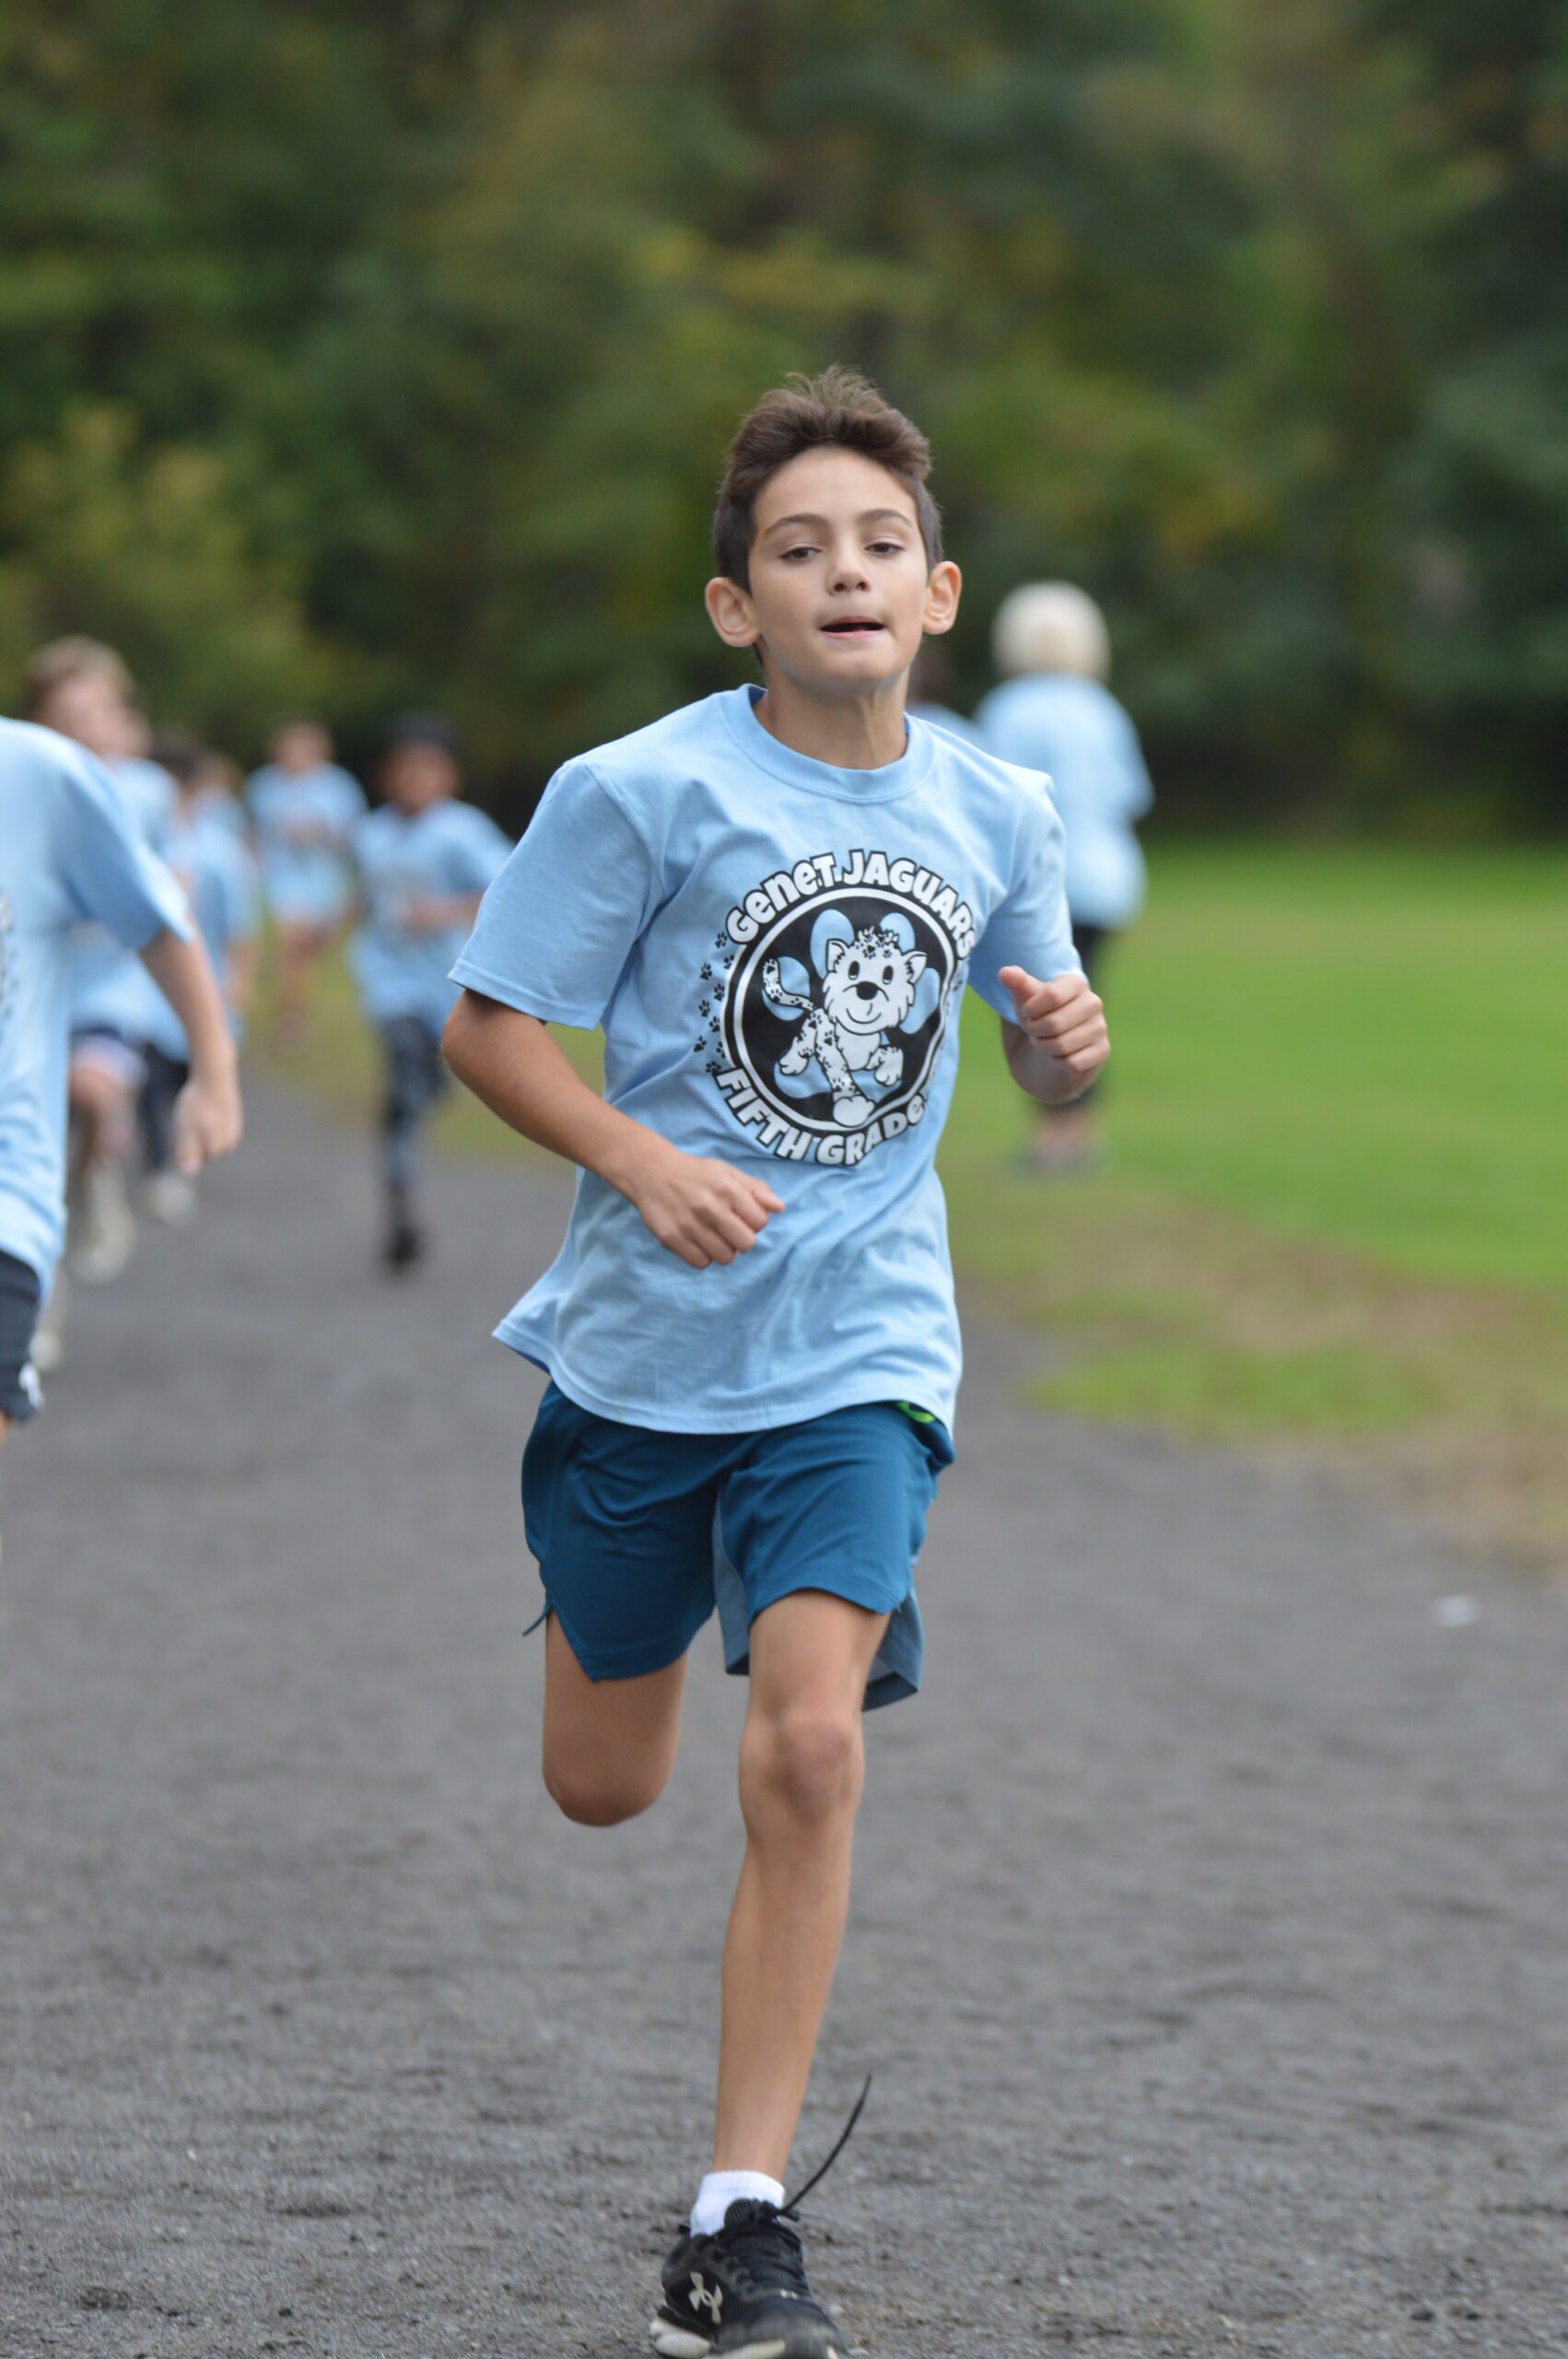 A student runs in the Genet Fall Fun Run.